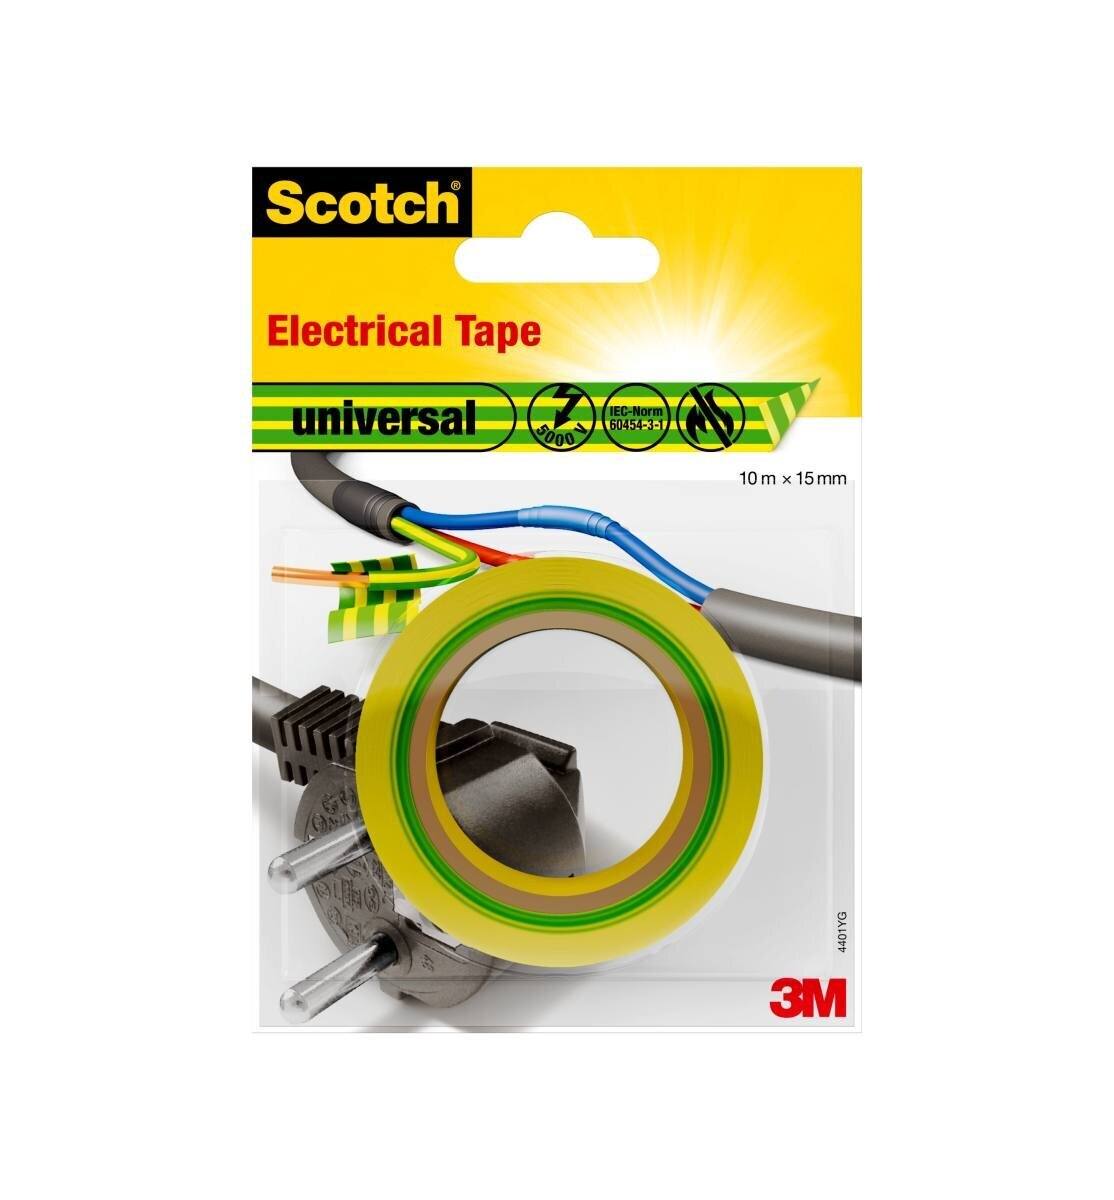 3M Scotch nastro isolante universale 4401YG, 15 mm x 10 m, giallo, verde